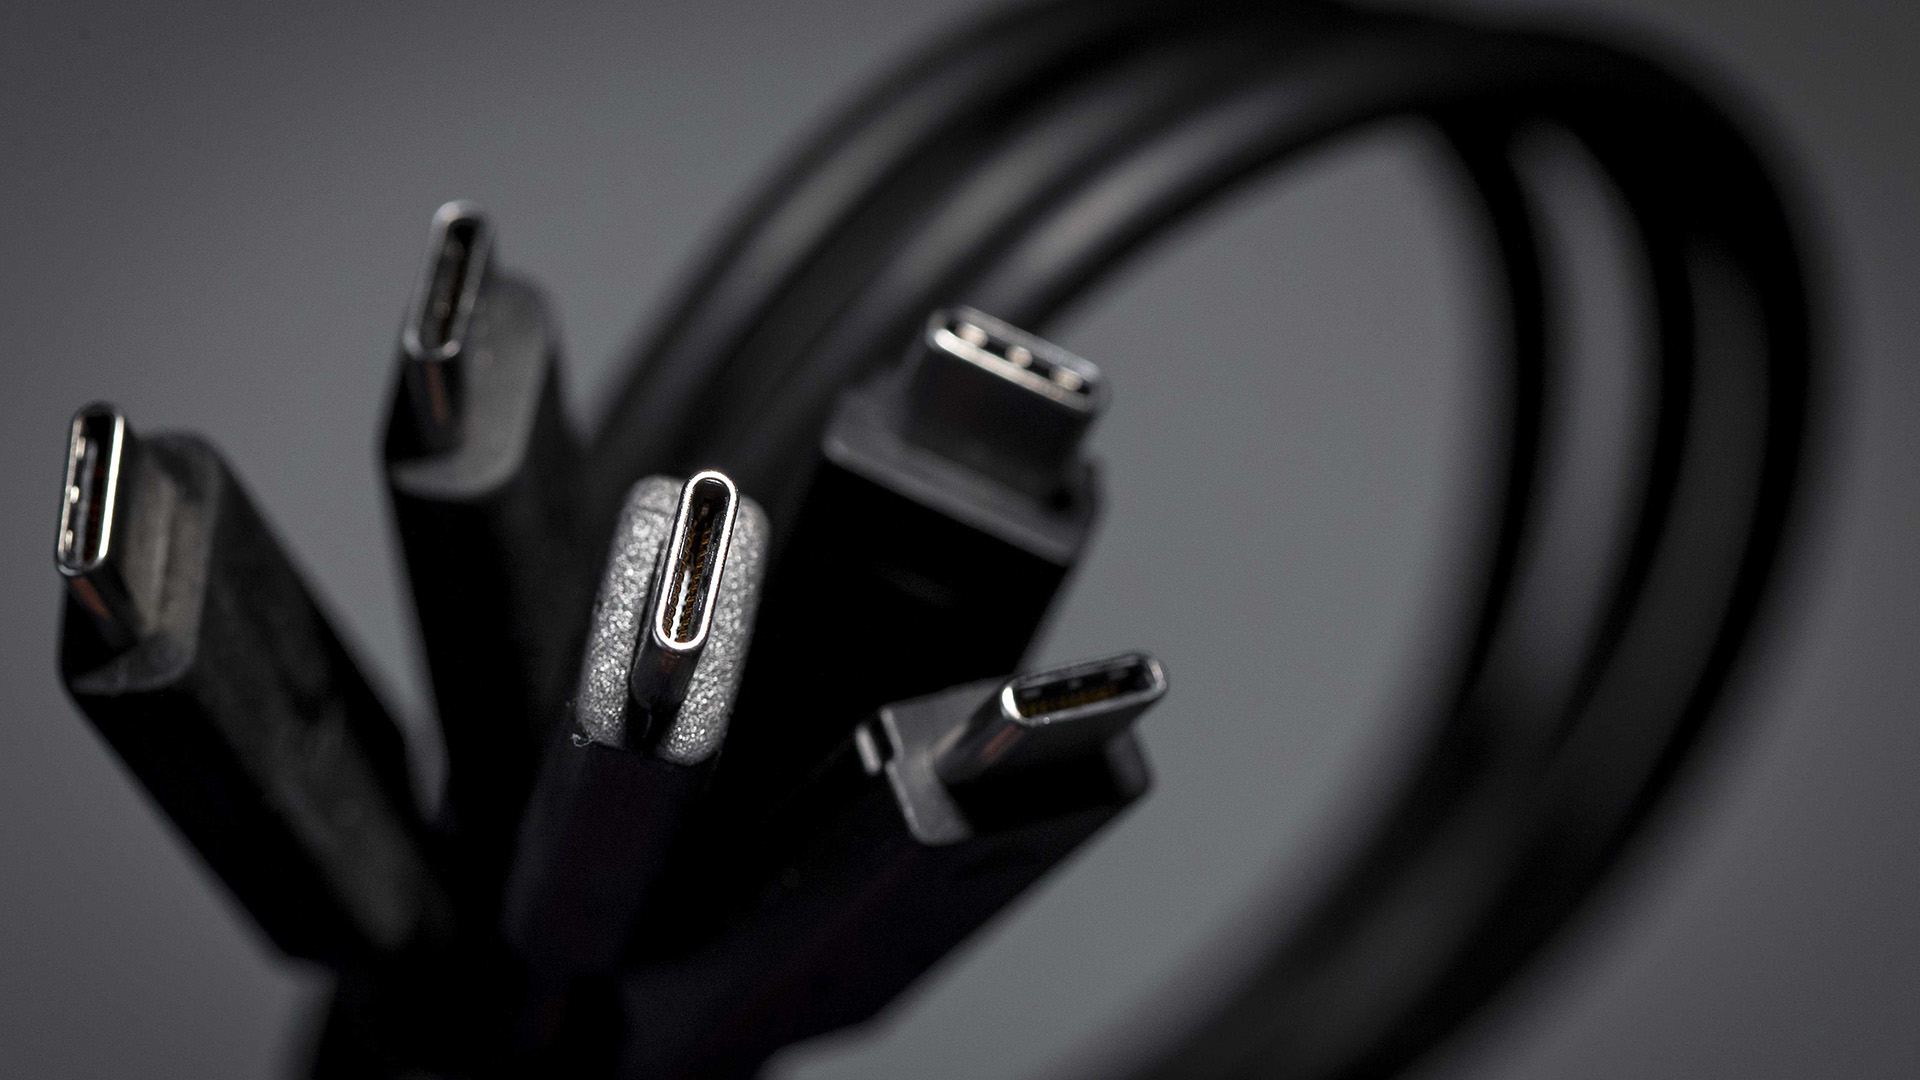 USB-C-Kabel | picture alliance / ANP